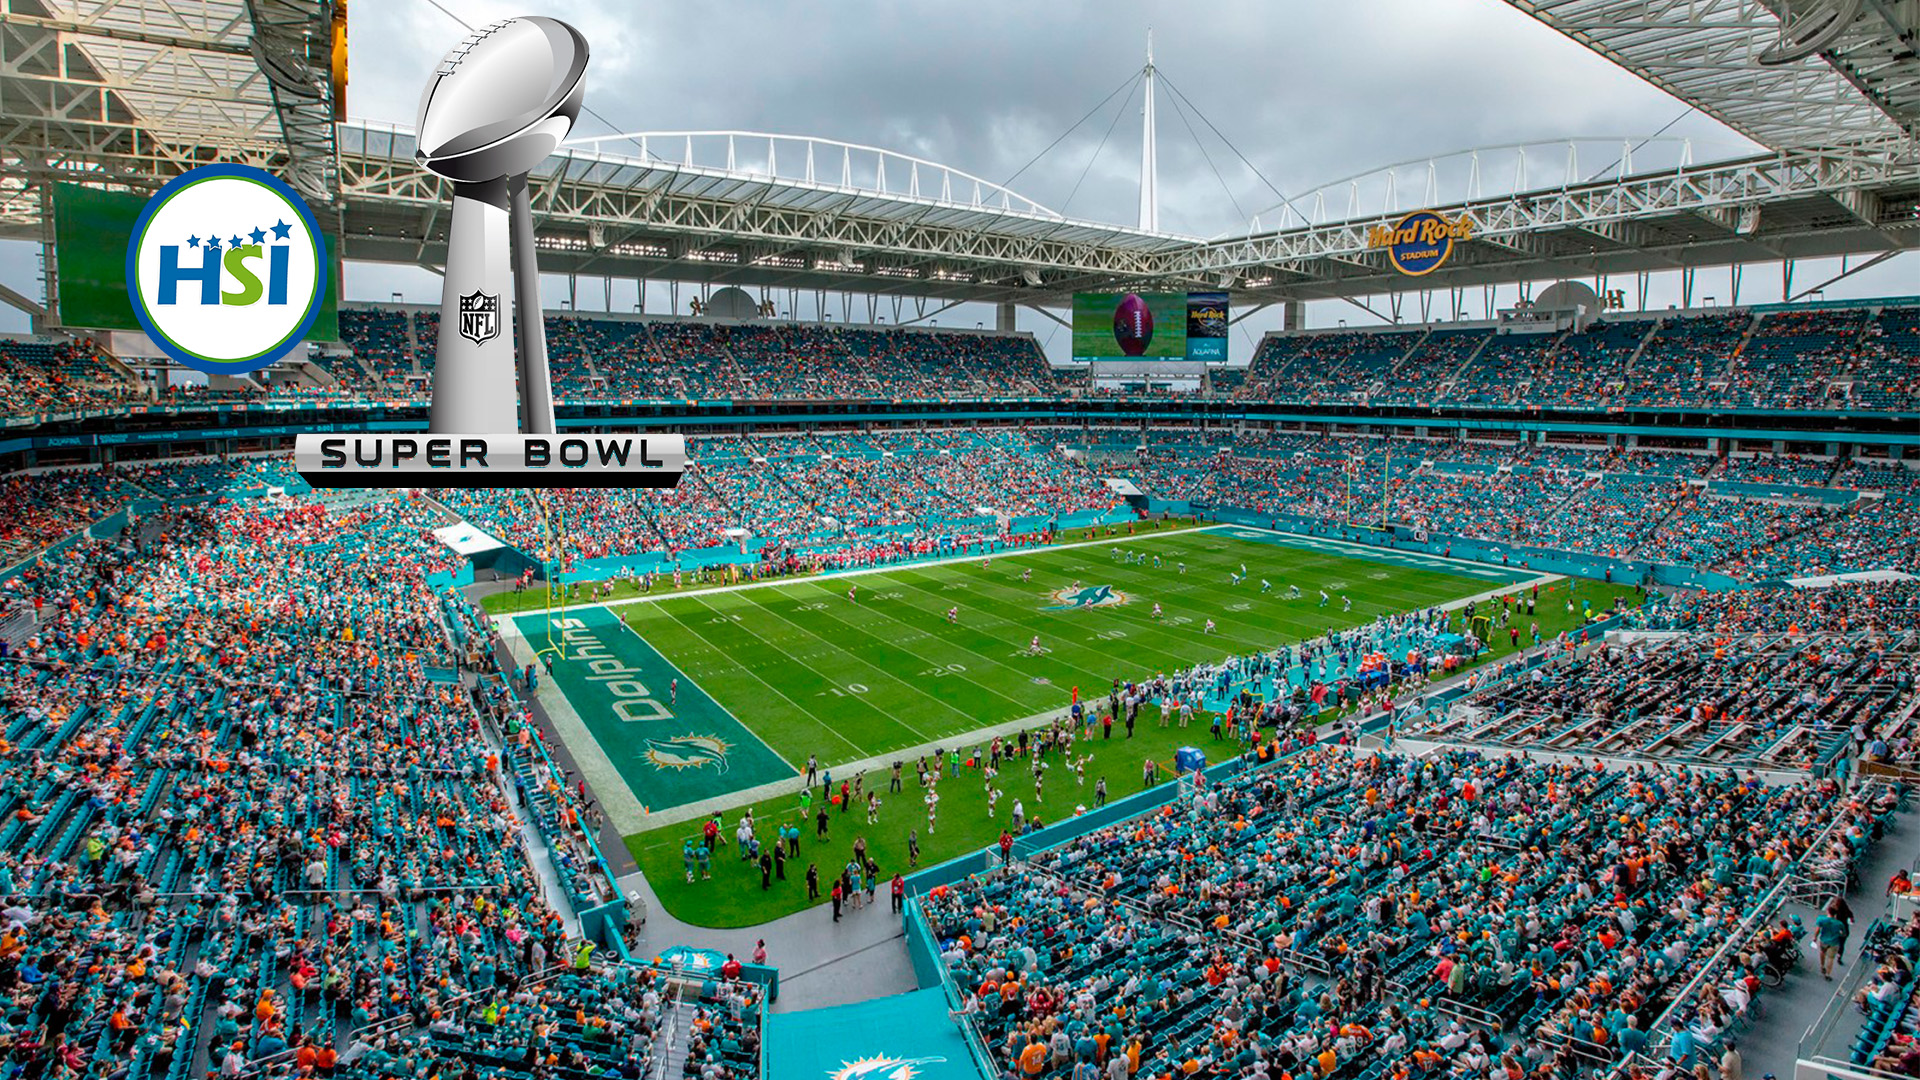 Bayfront de Miami albergará festival previo al Super Bowl 54